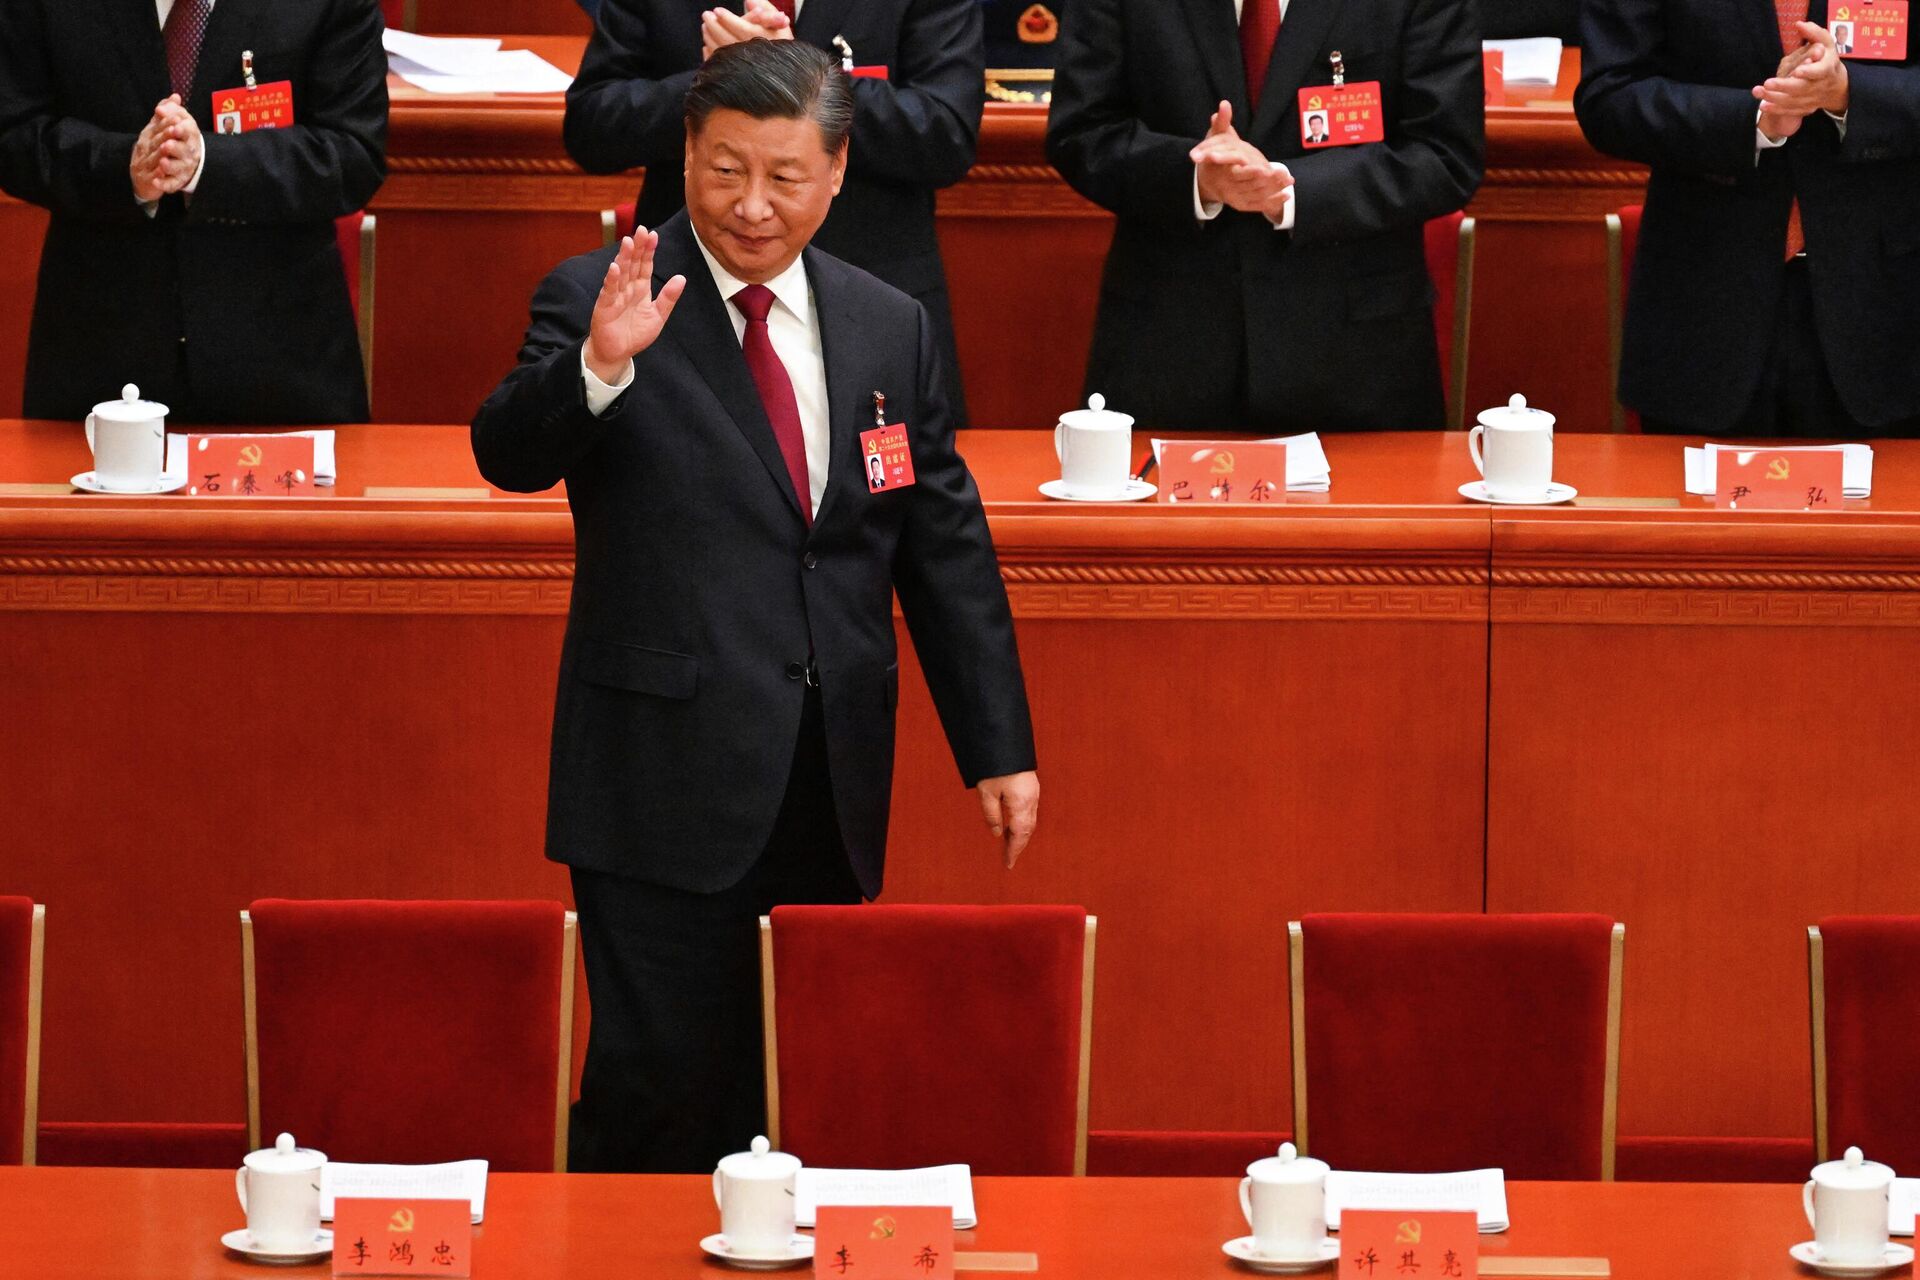 Kineski predsednik Si Đinping pozdravlja učesnike 20. kongresa Komunističke partije Kine (KPK). - Sputnik Srbija, 1920, 30.10.2022